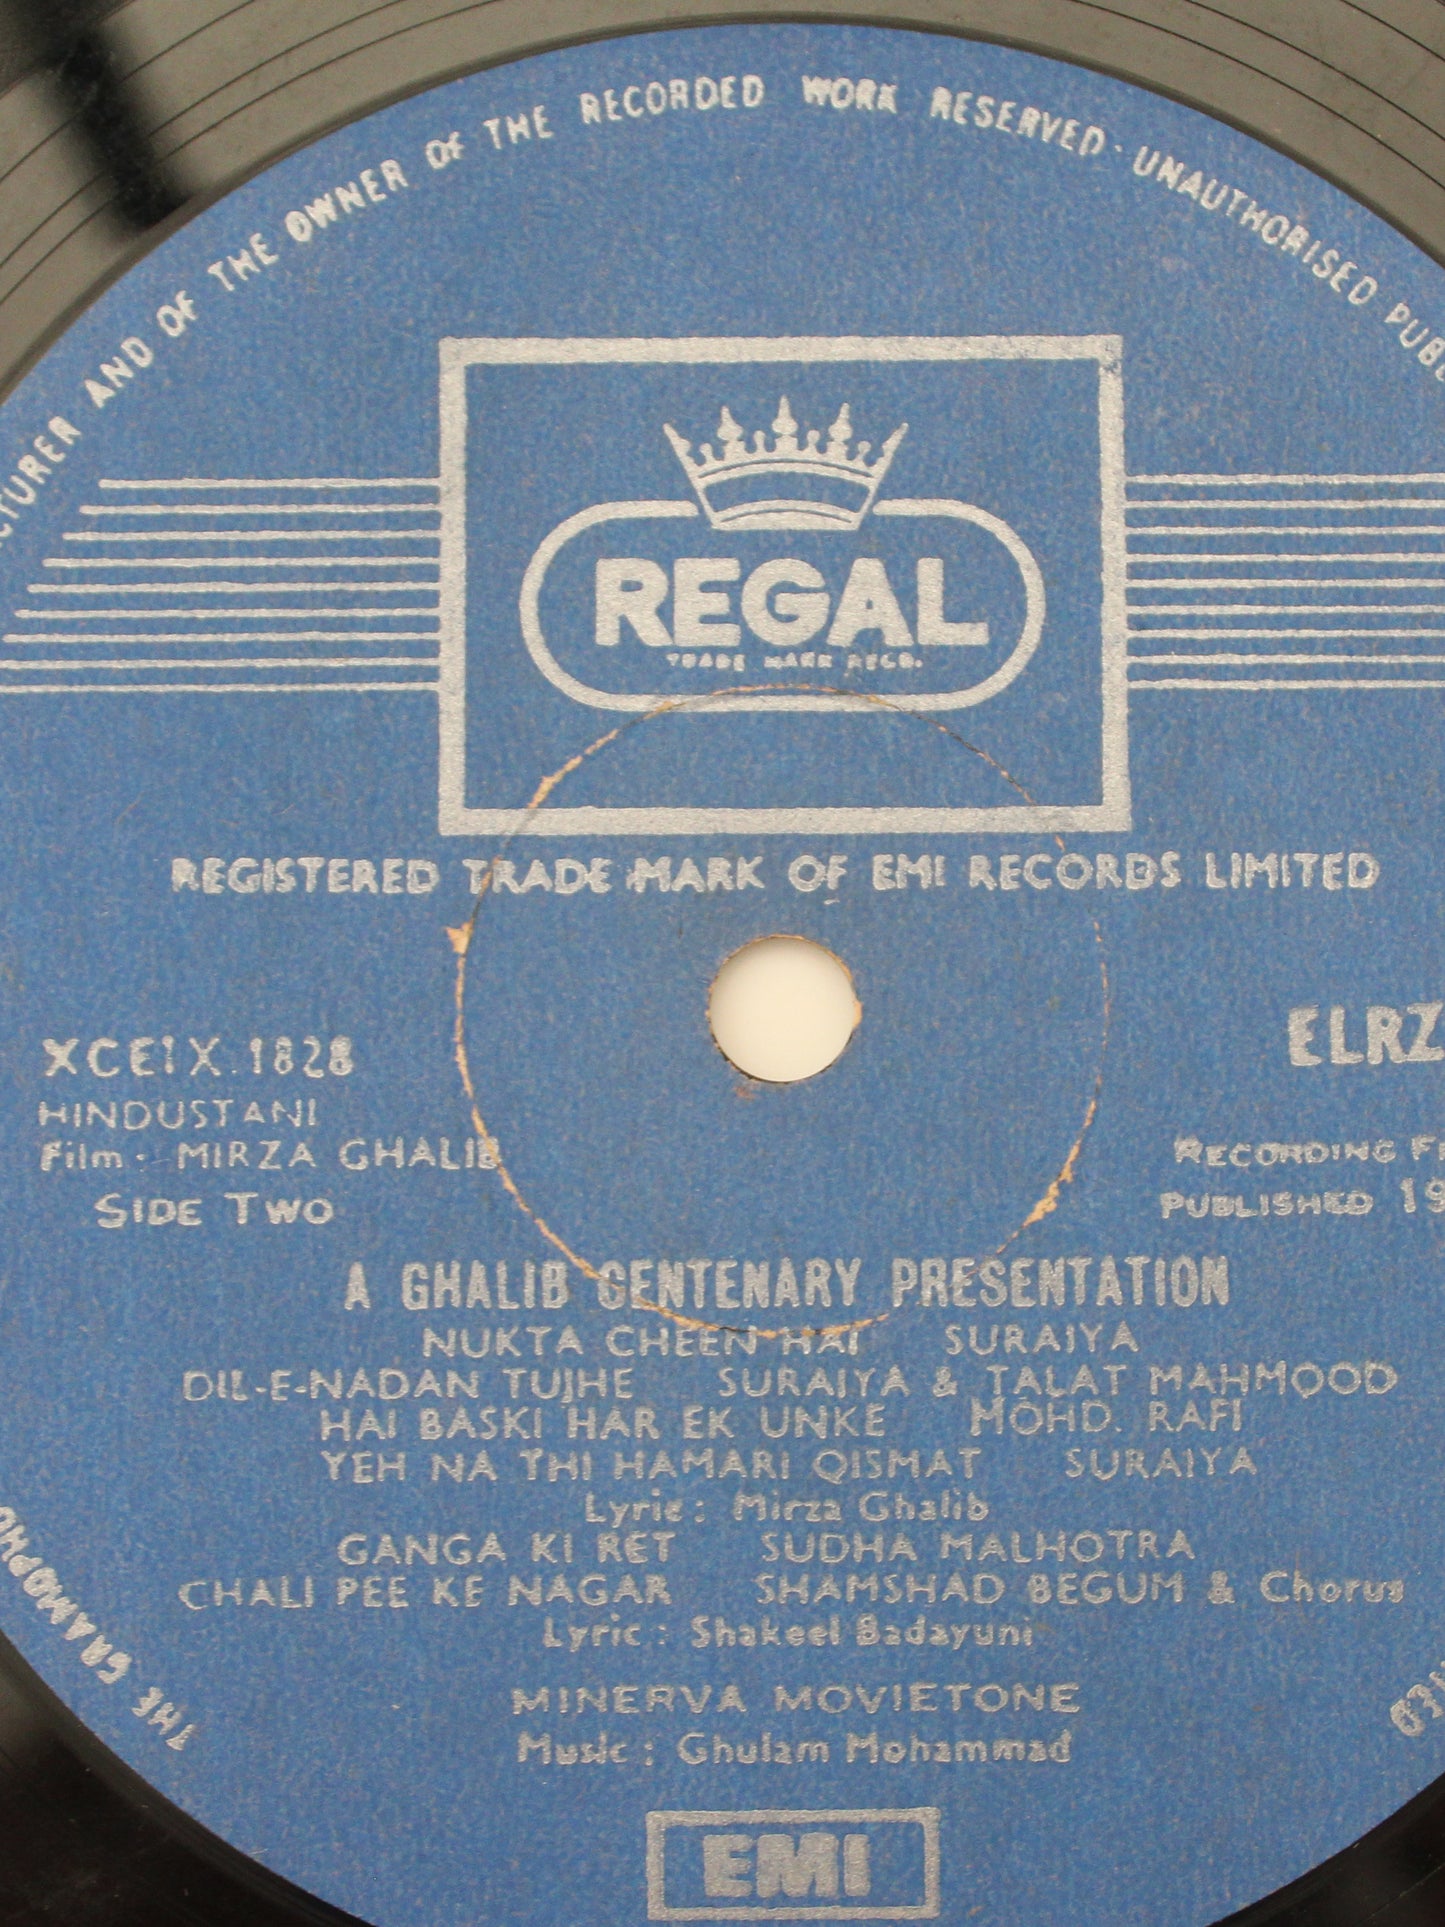 Vintage | 1969 "Mirza Ghalib" Vinyl Record